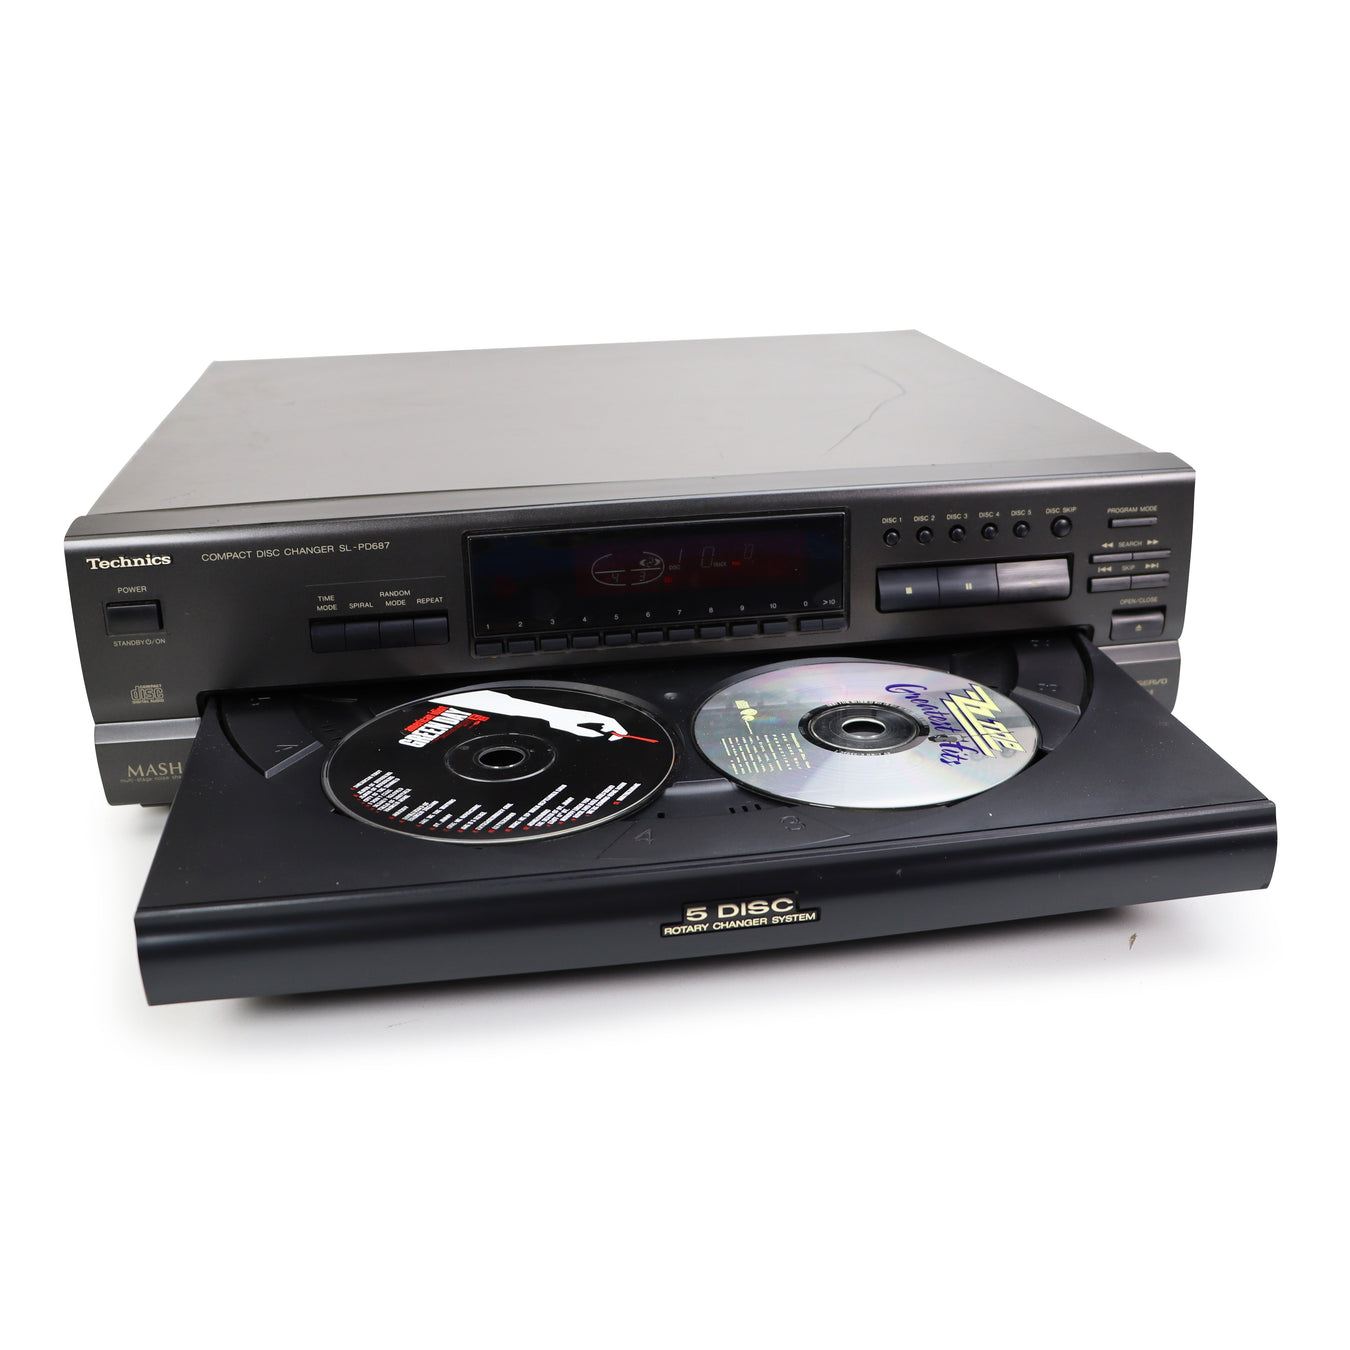 5 disc technics cd player changer carousel multi disc disk system analog optical digital audio vintage